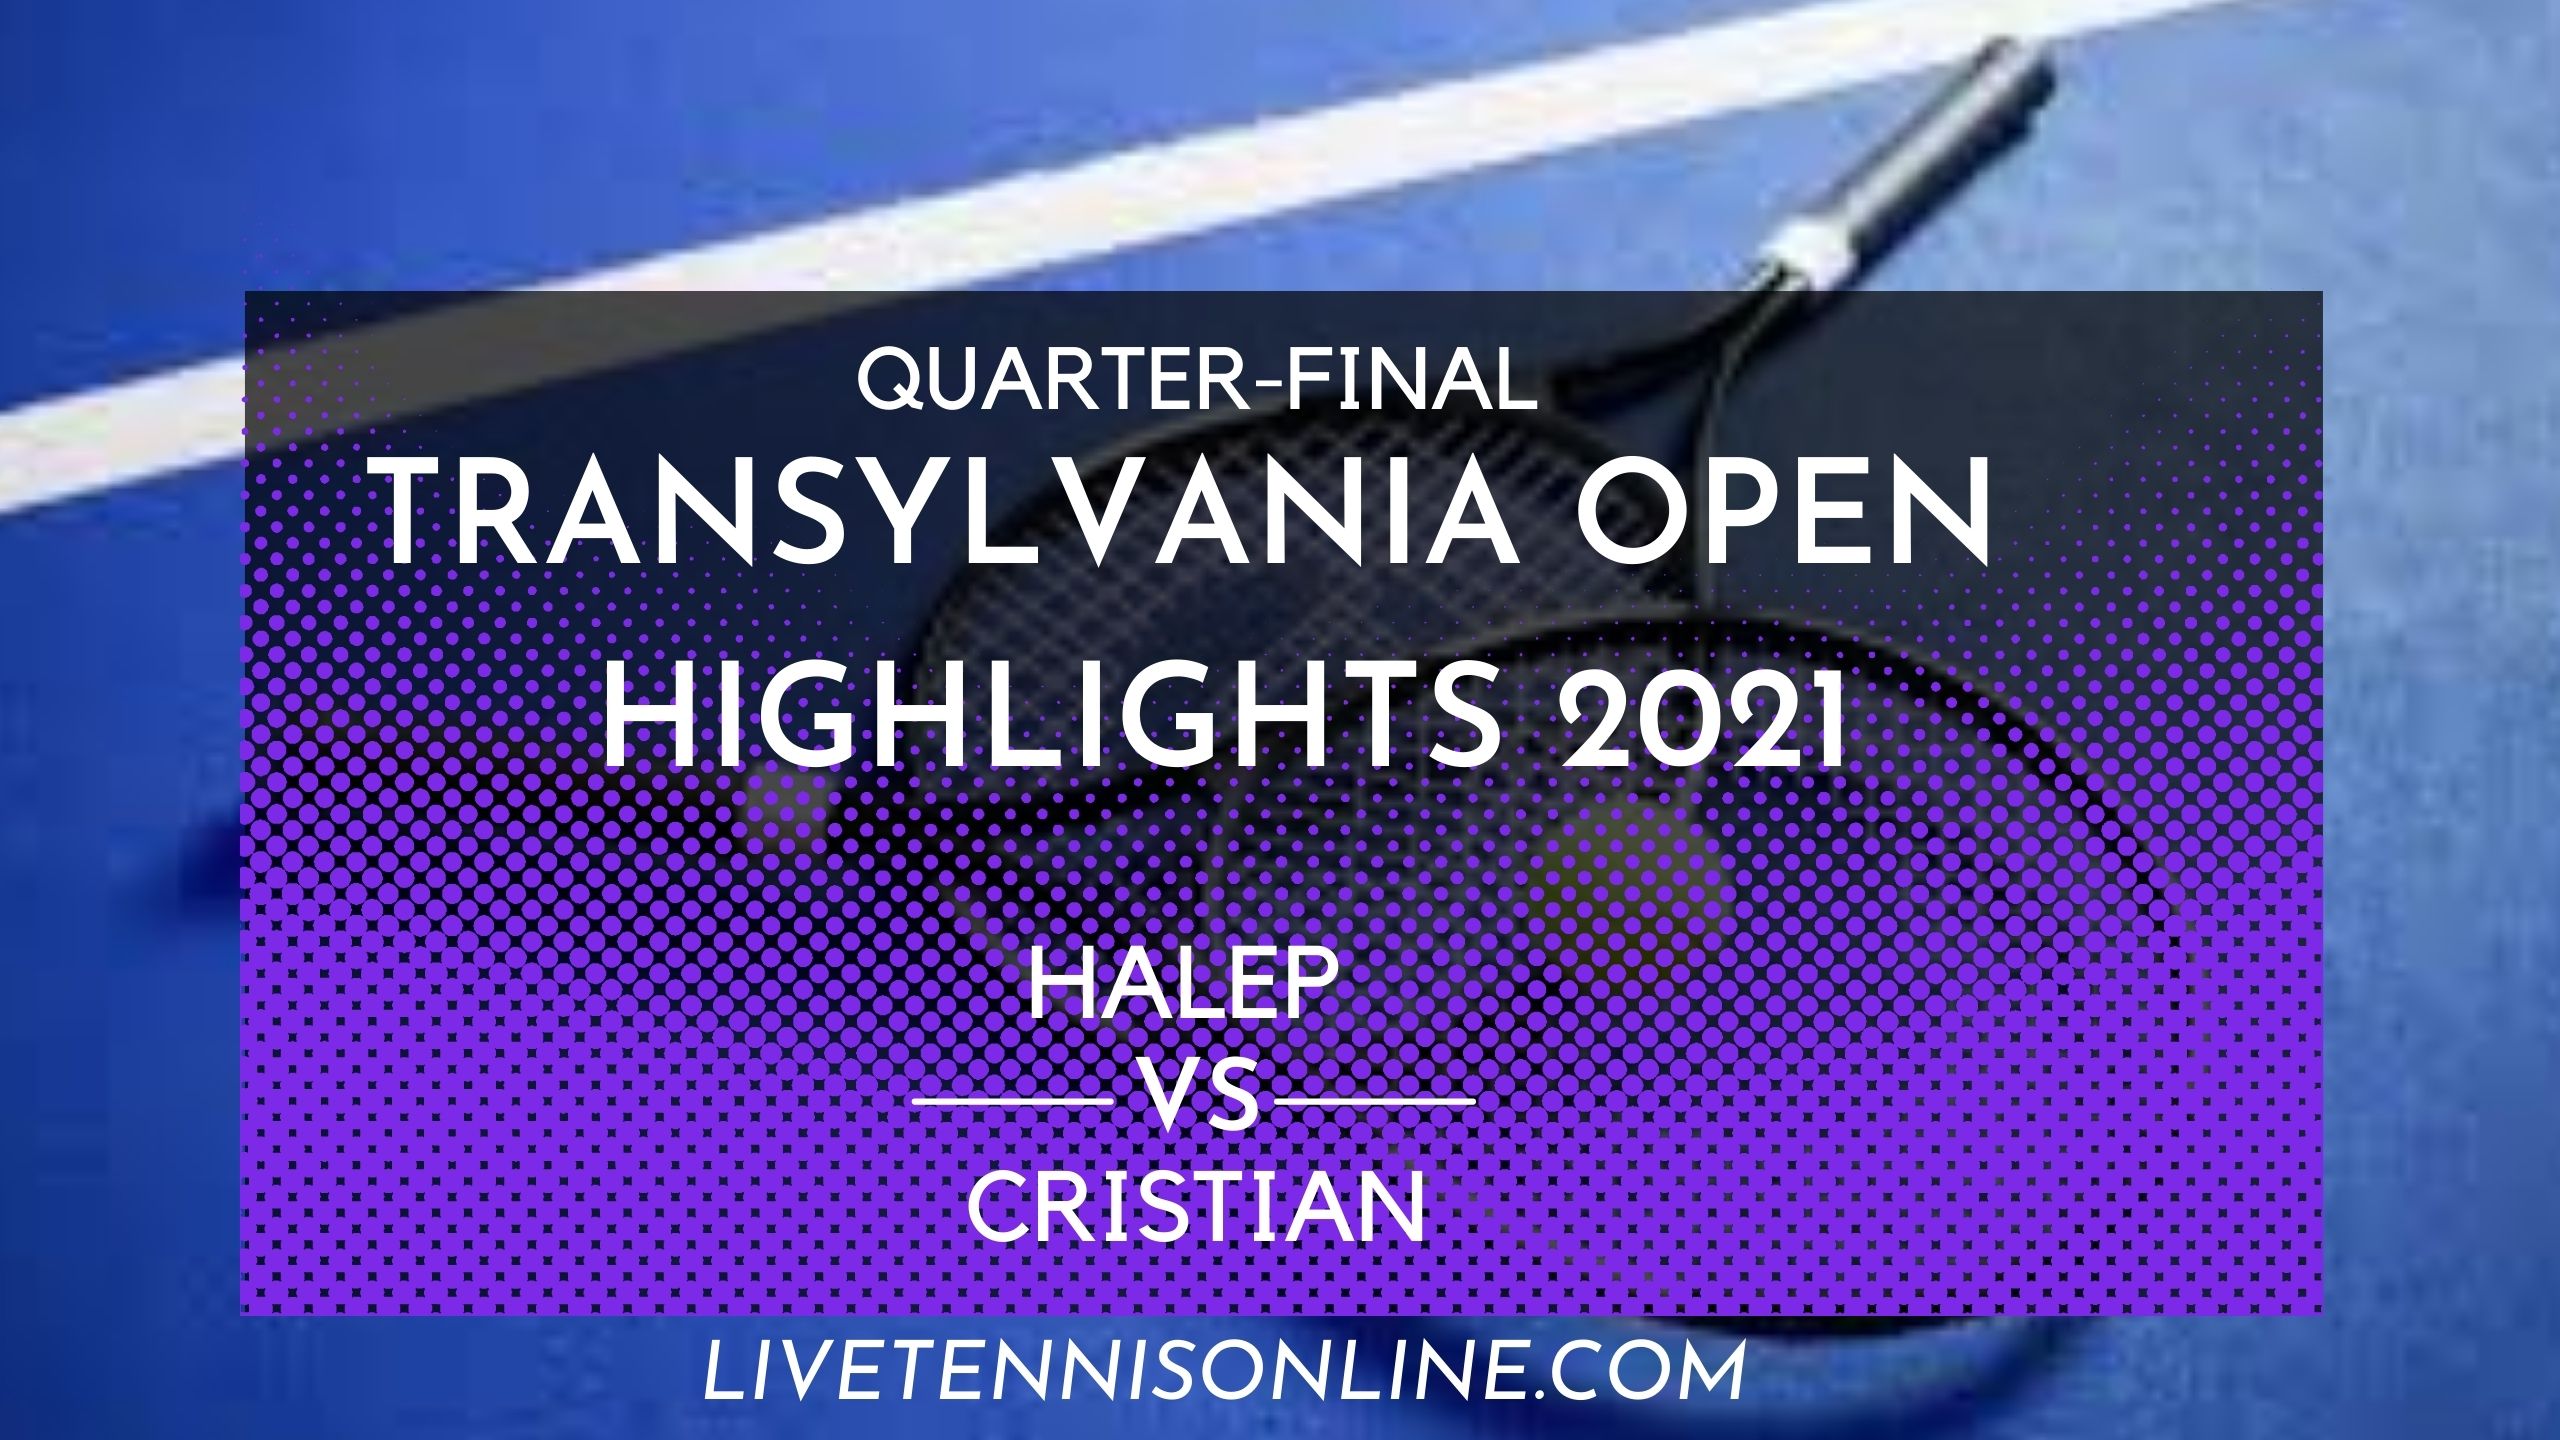 Halep Vs Cristian QF Highlights 2021 Transylvania Open